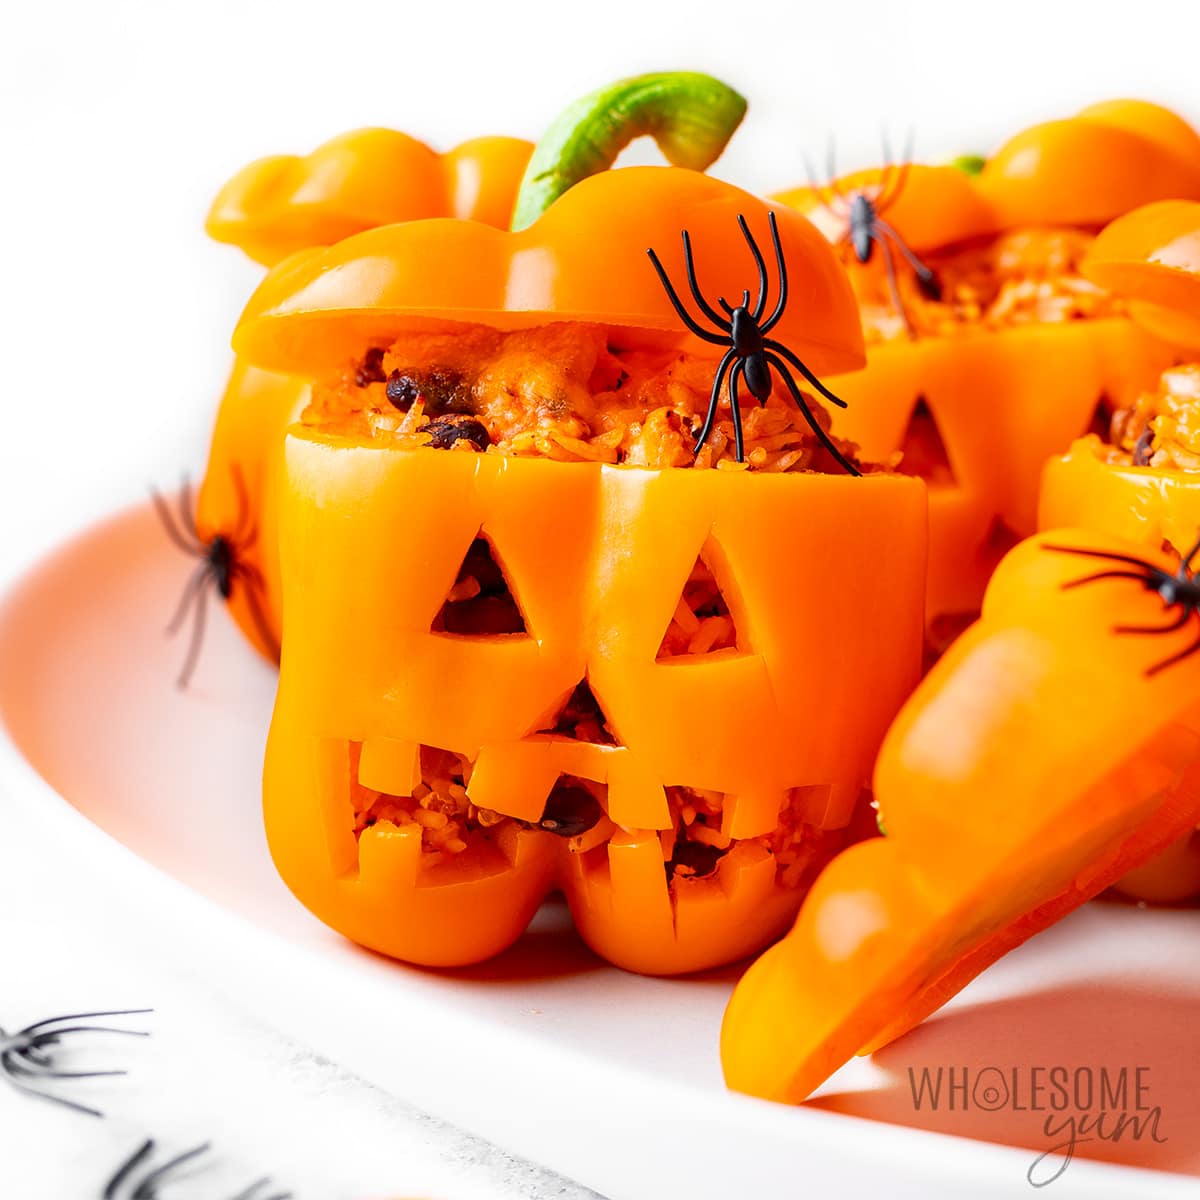 Jack-o-lantern Halloween stuffed peppers close up.